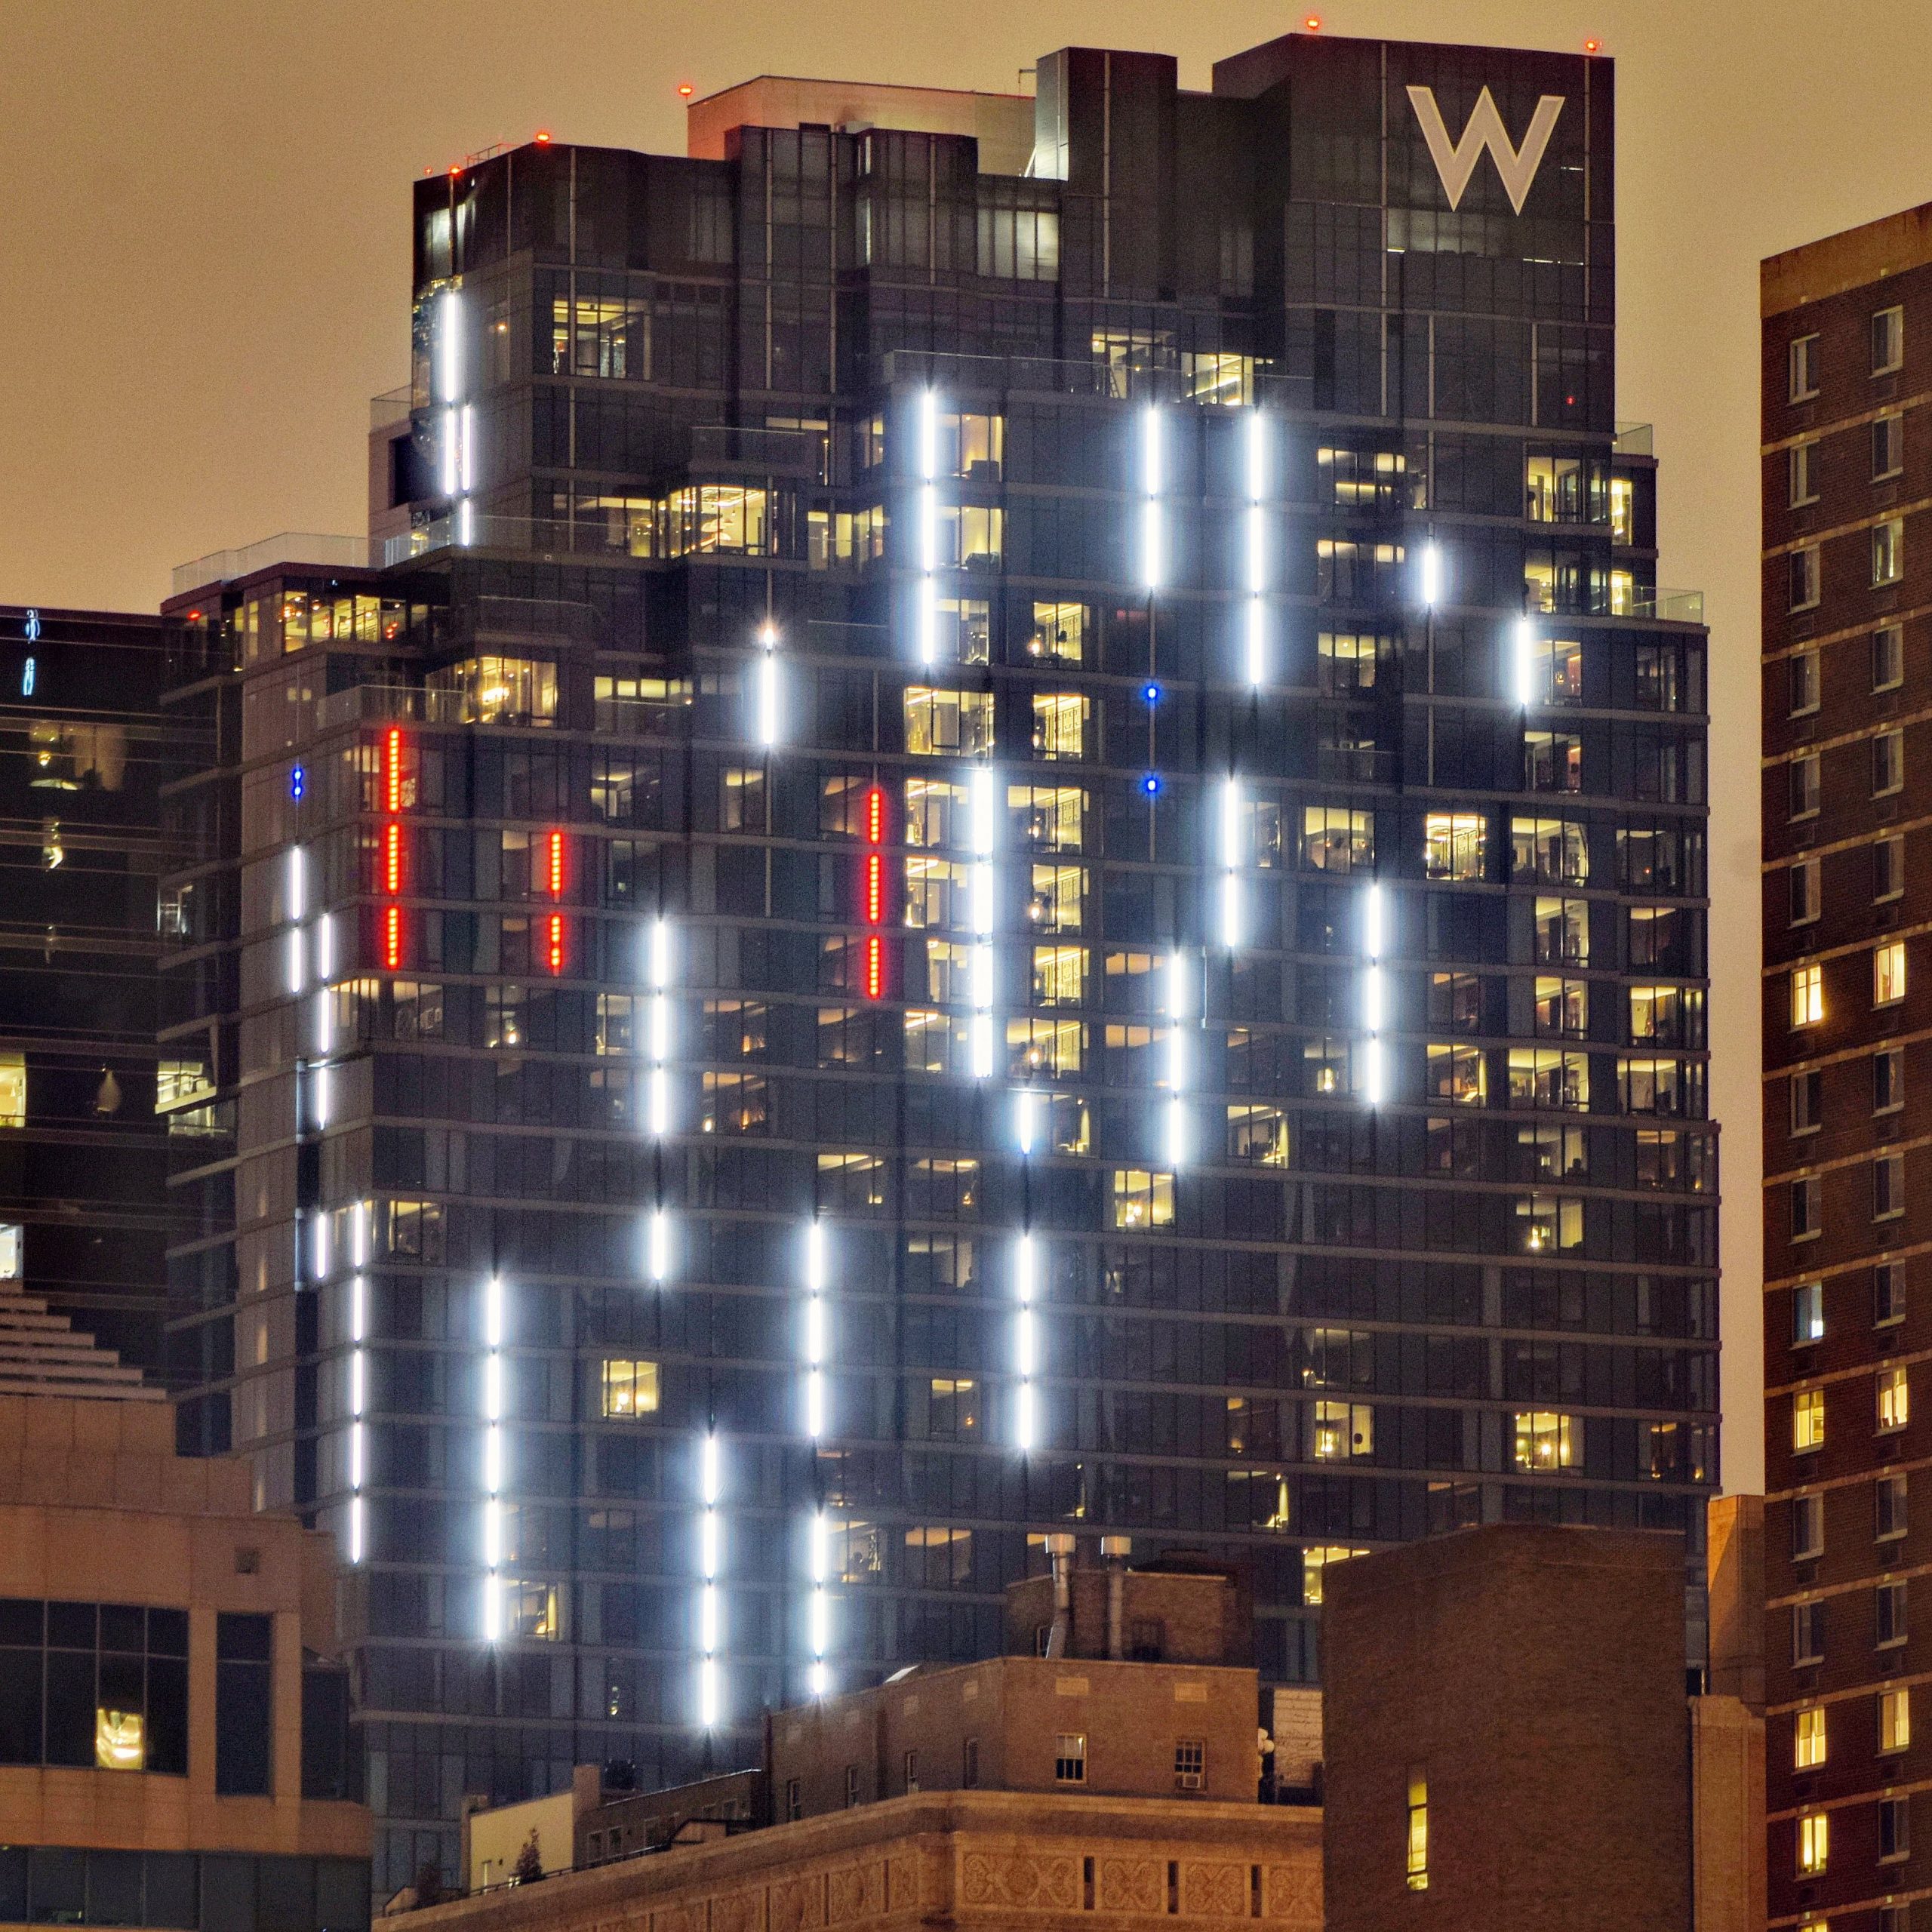 W/Element Hotel with decorative lighting. Photo by Thomas Koloski